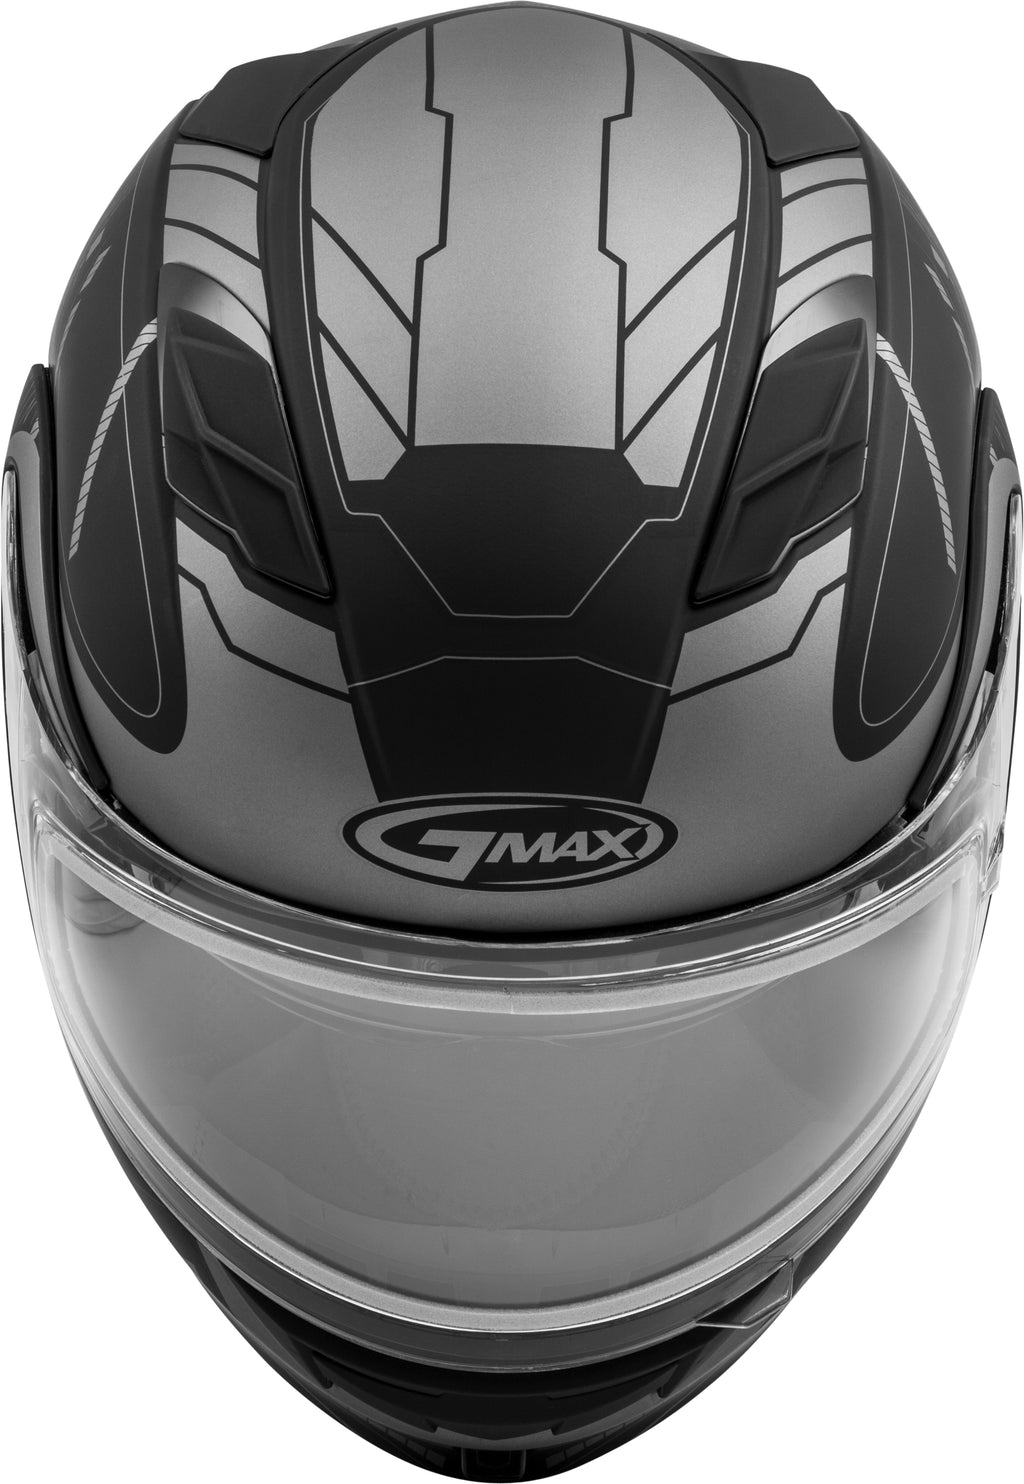 Md 01s Modular Wired Snow Helmet Matte Black/Silver Md